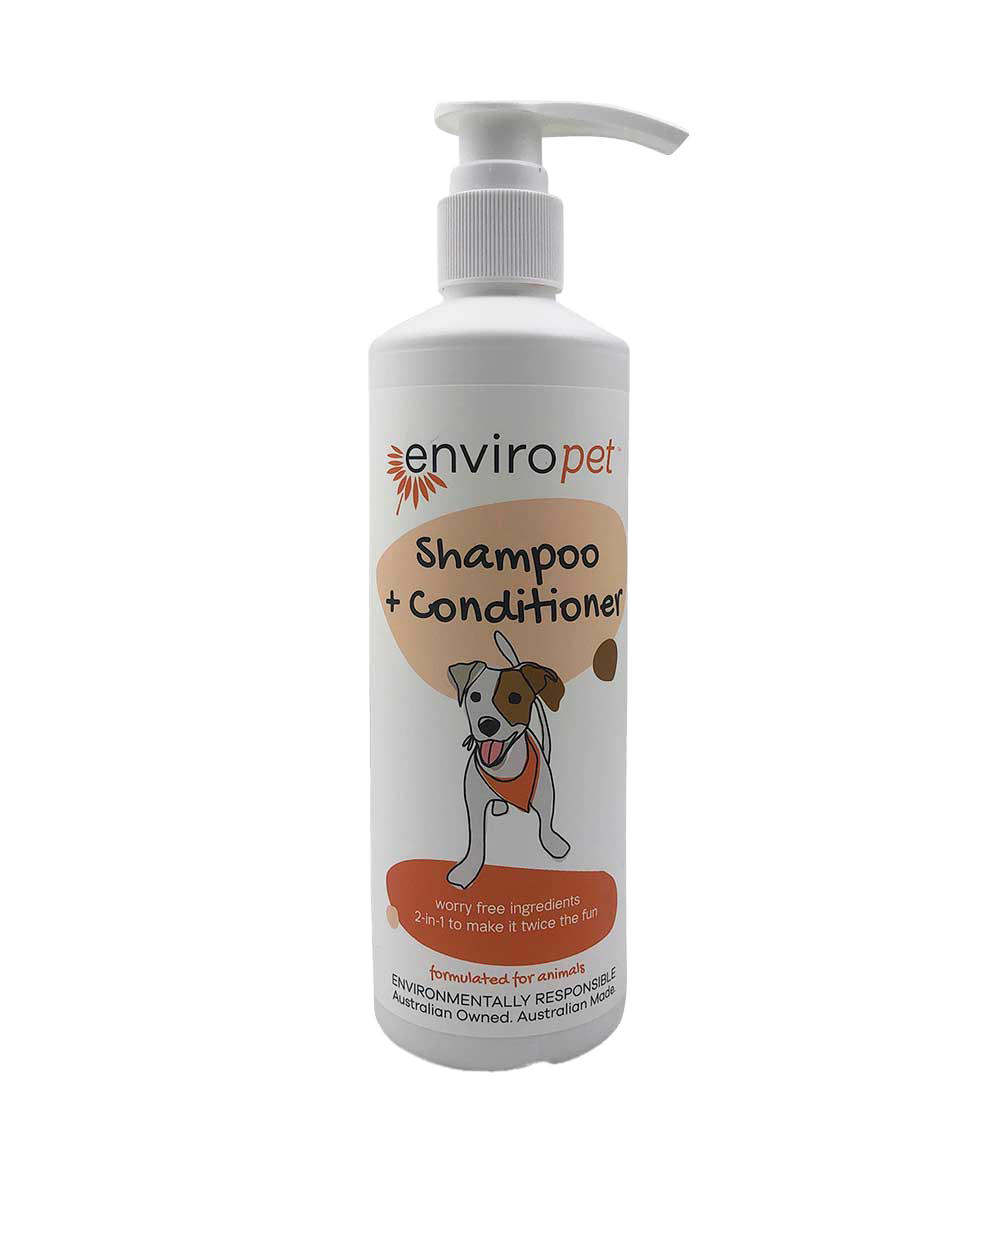 Pet Shampoo & Conditioner